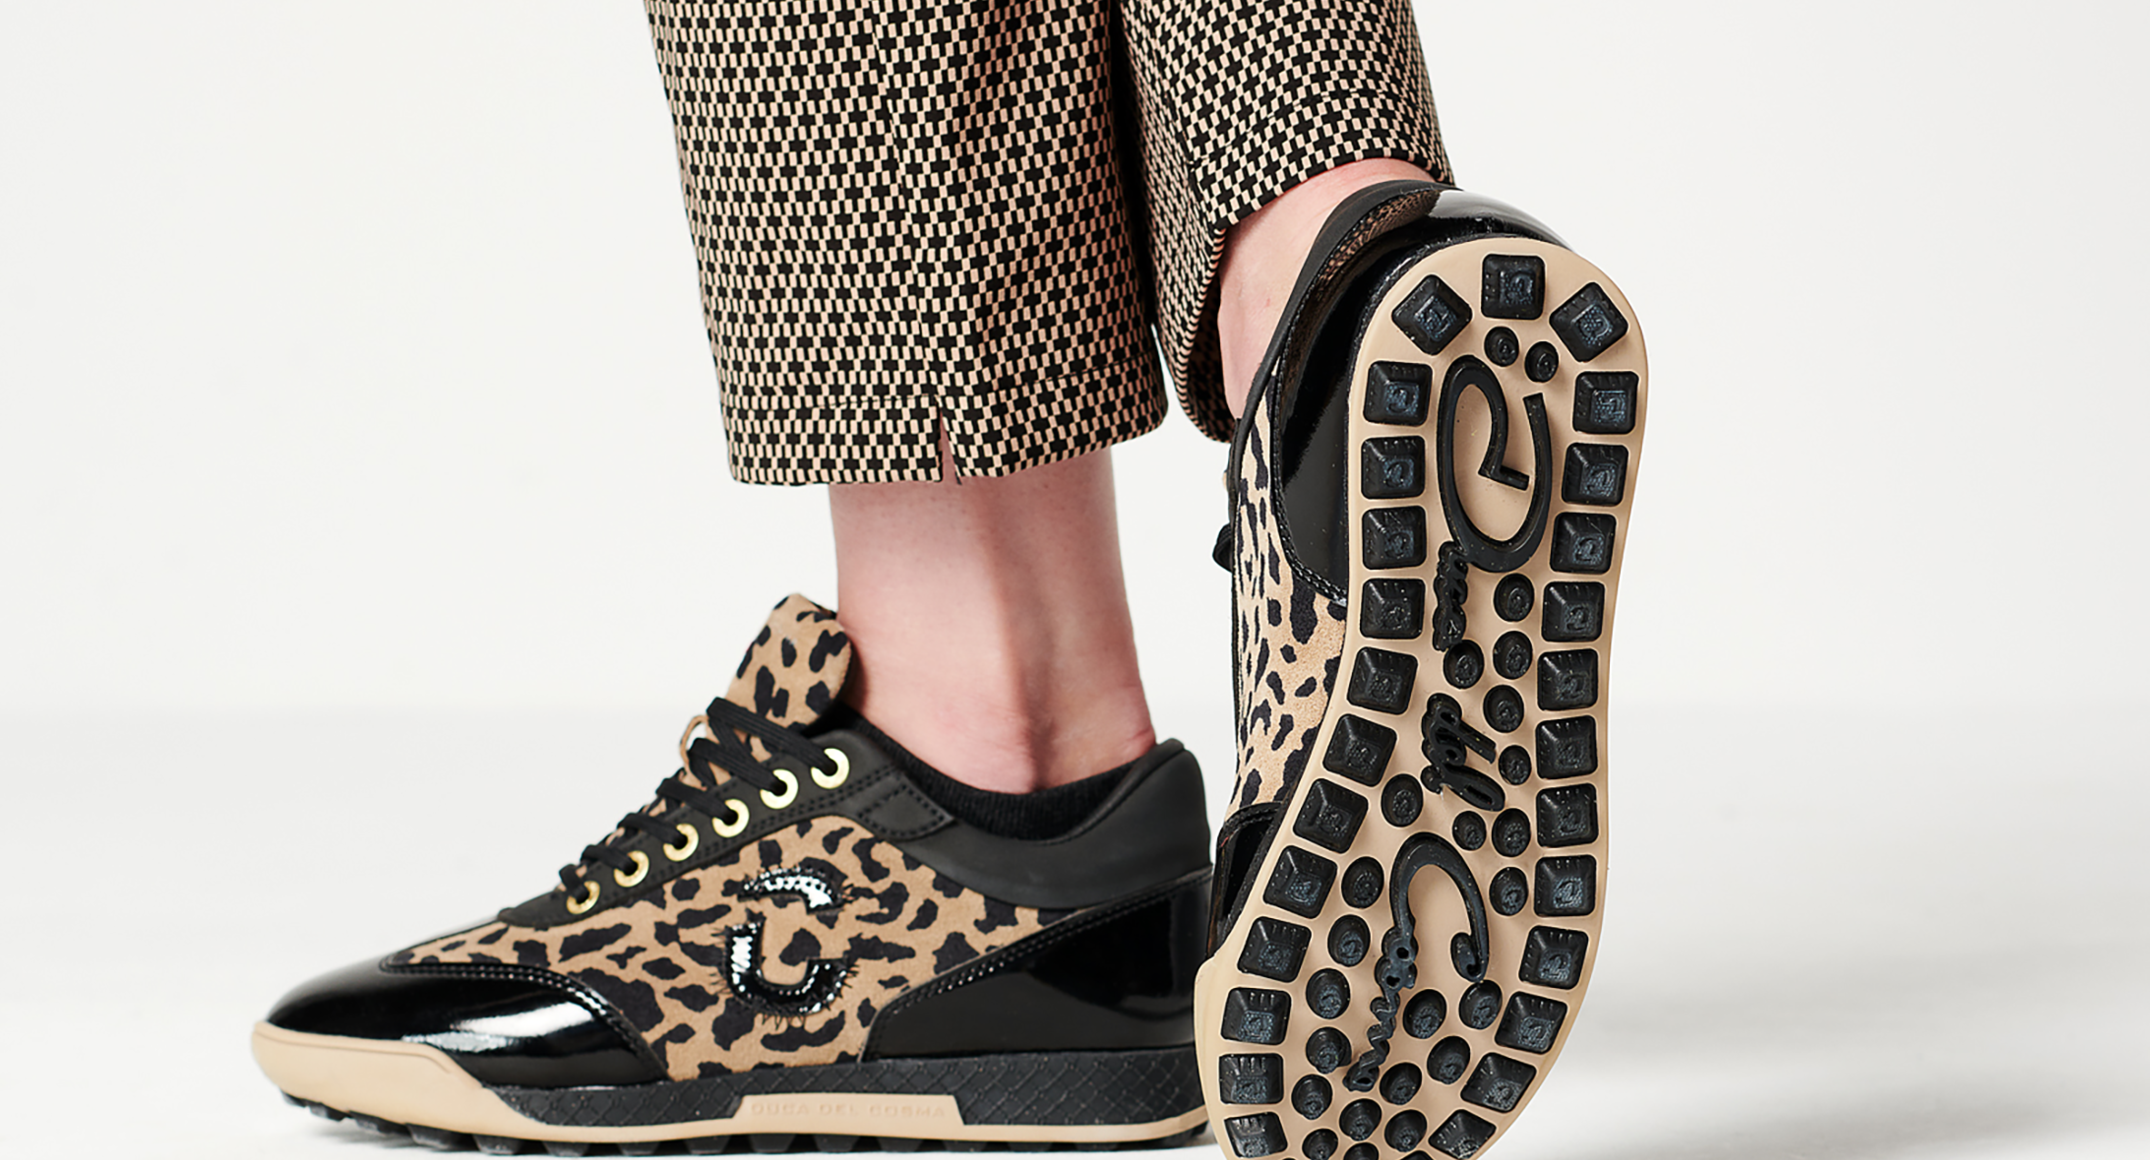 Duca del Cosma’s ‘King Cheetah’ golf & lifestyle sneaker 